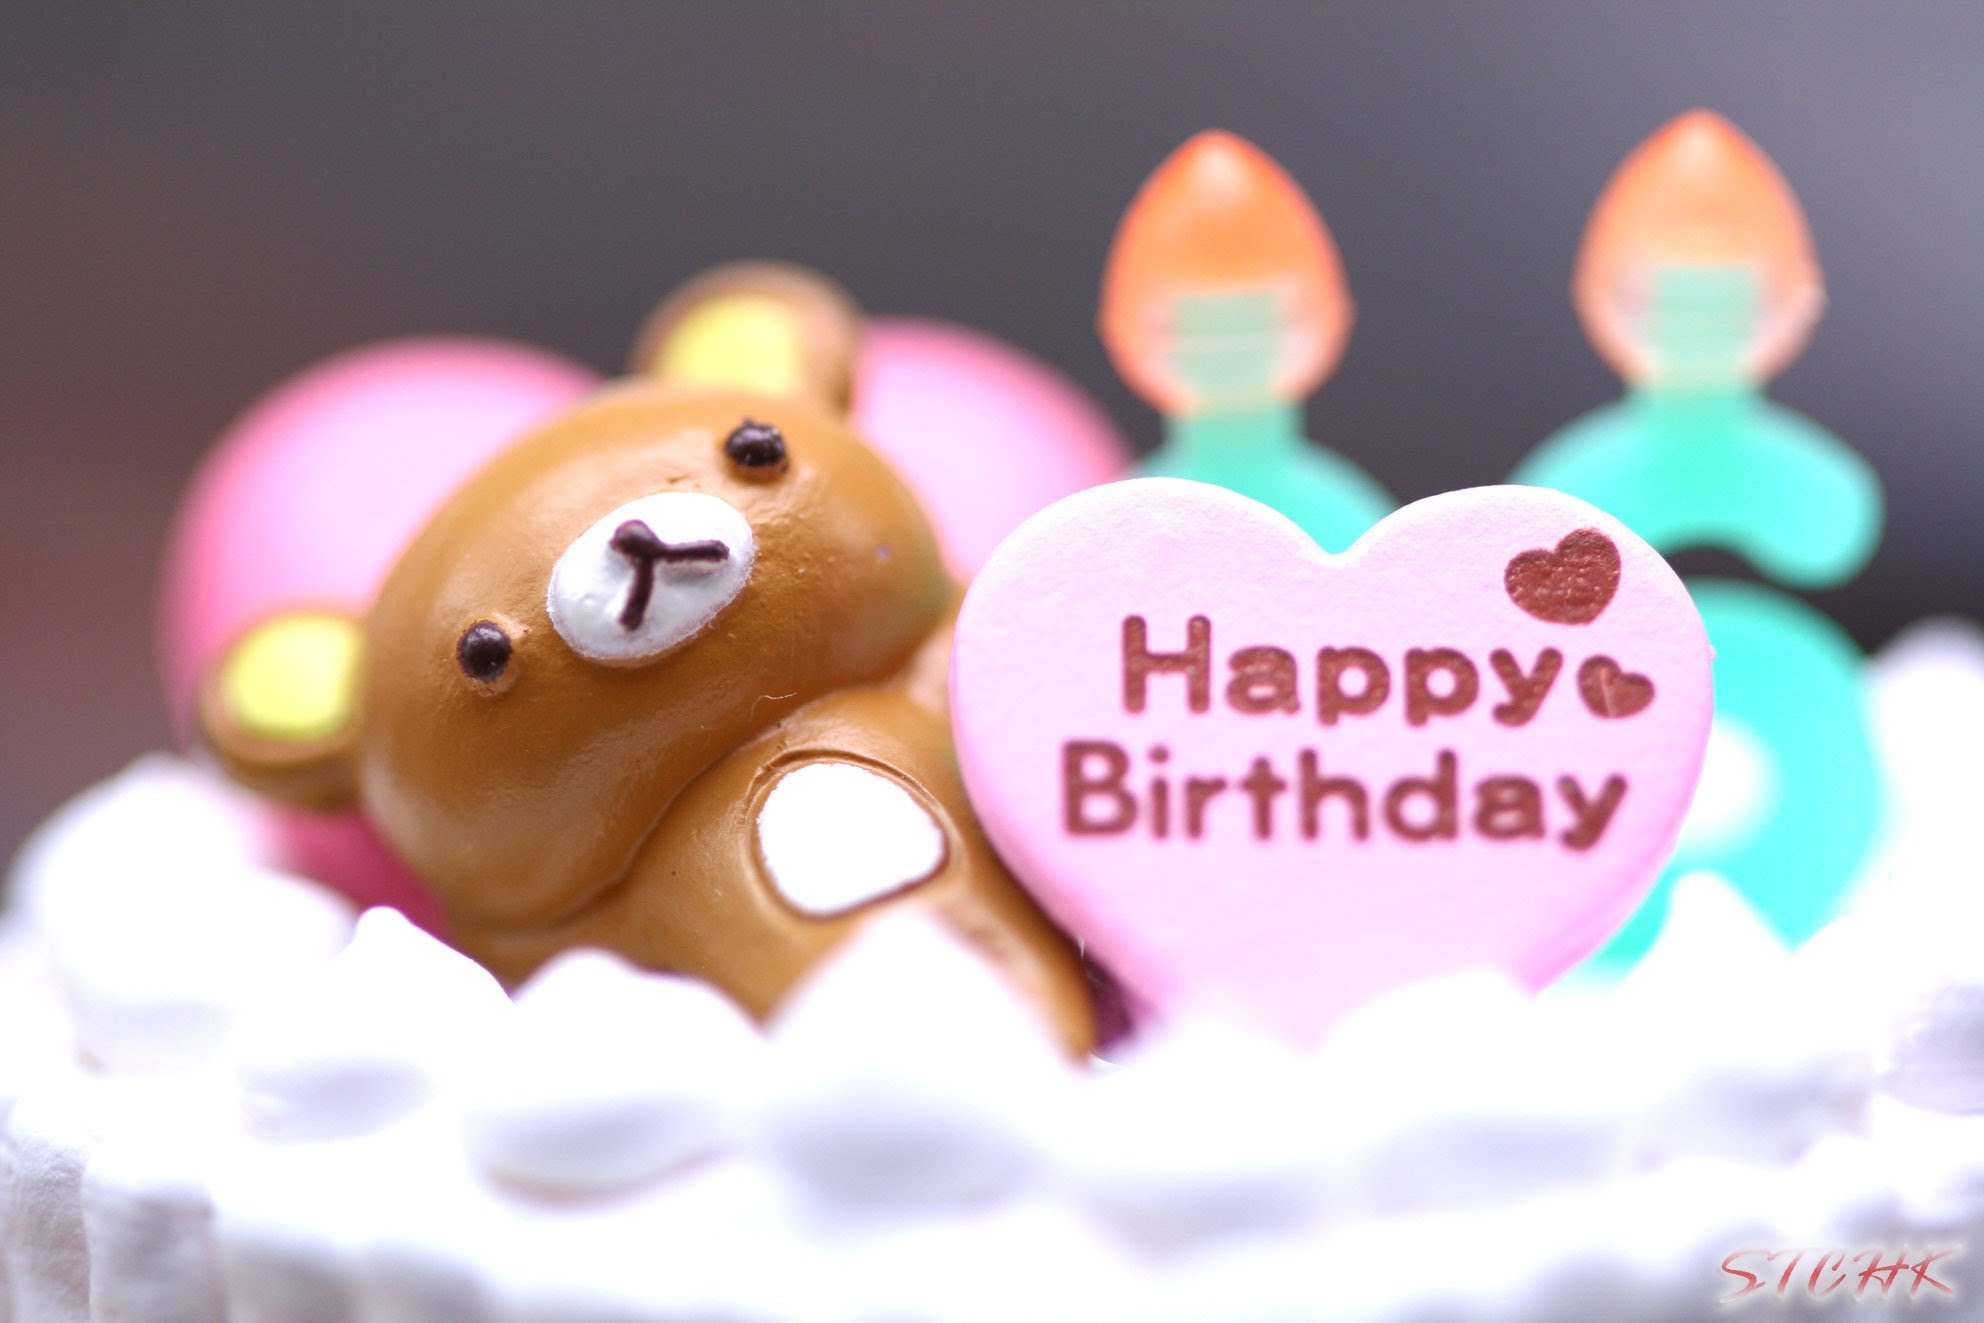 San X Rilakkuma 10th Anniversary Happy Birthday Cake - عيد ميلاد سعيد وجدان , HD Wallpaper & Backgrounds